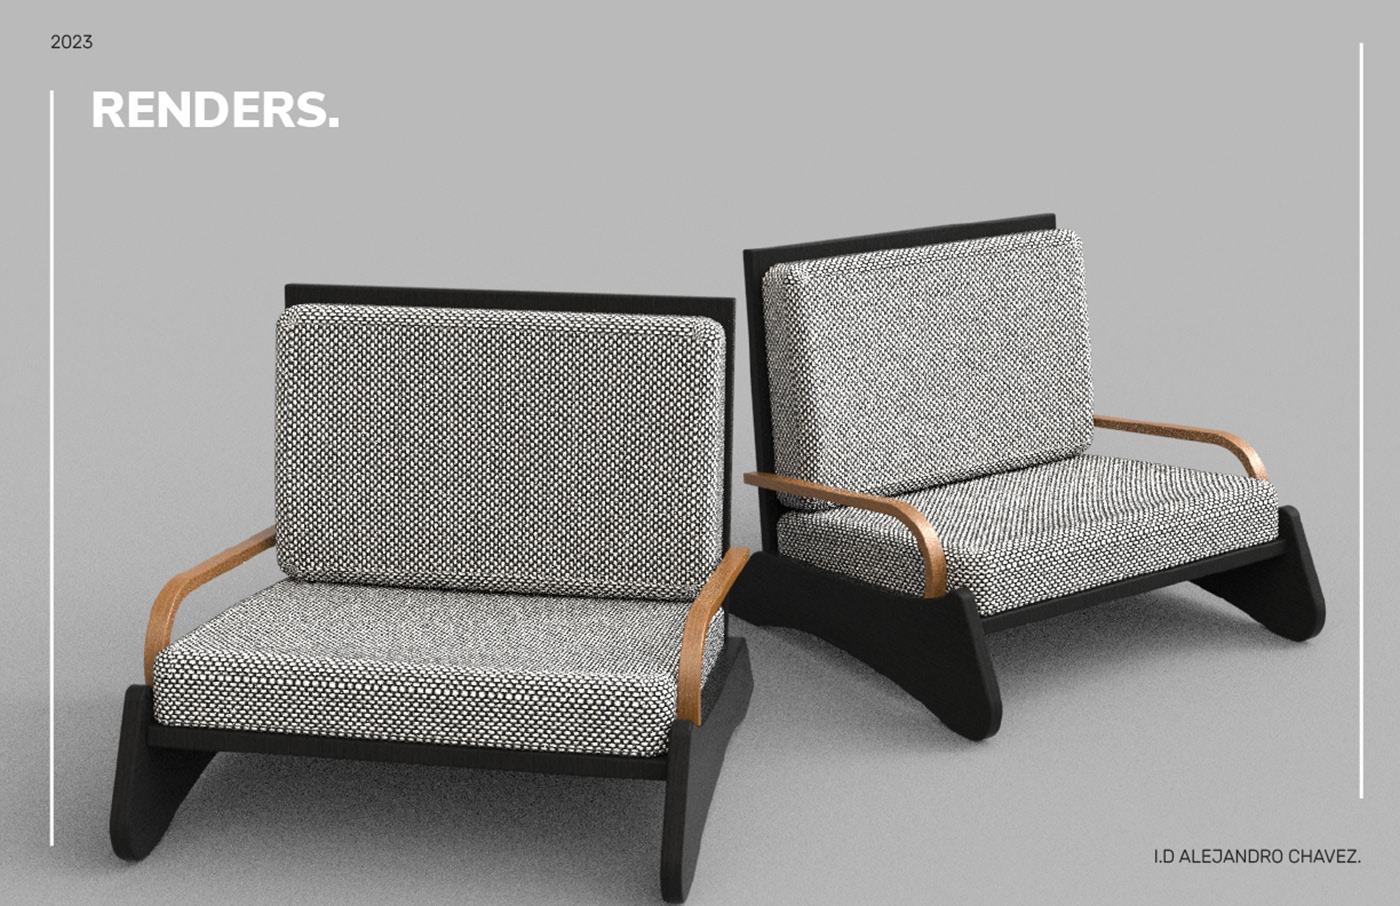 design industrial design  interior design  Render 3D coceptual furniture product design  furniture design  product